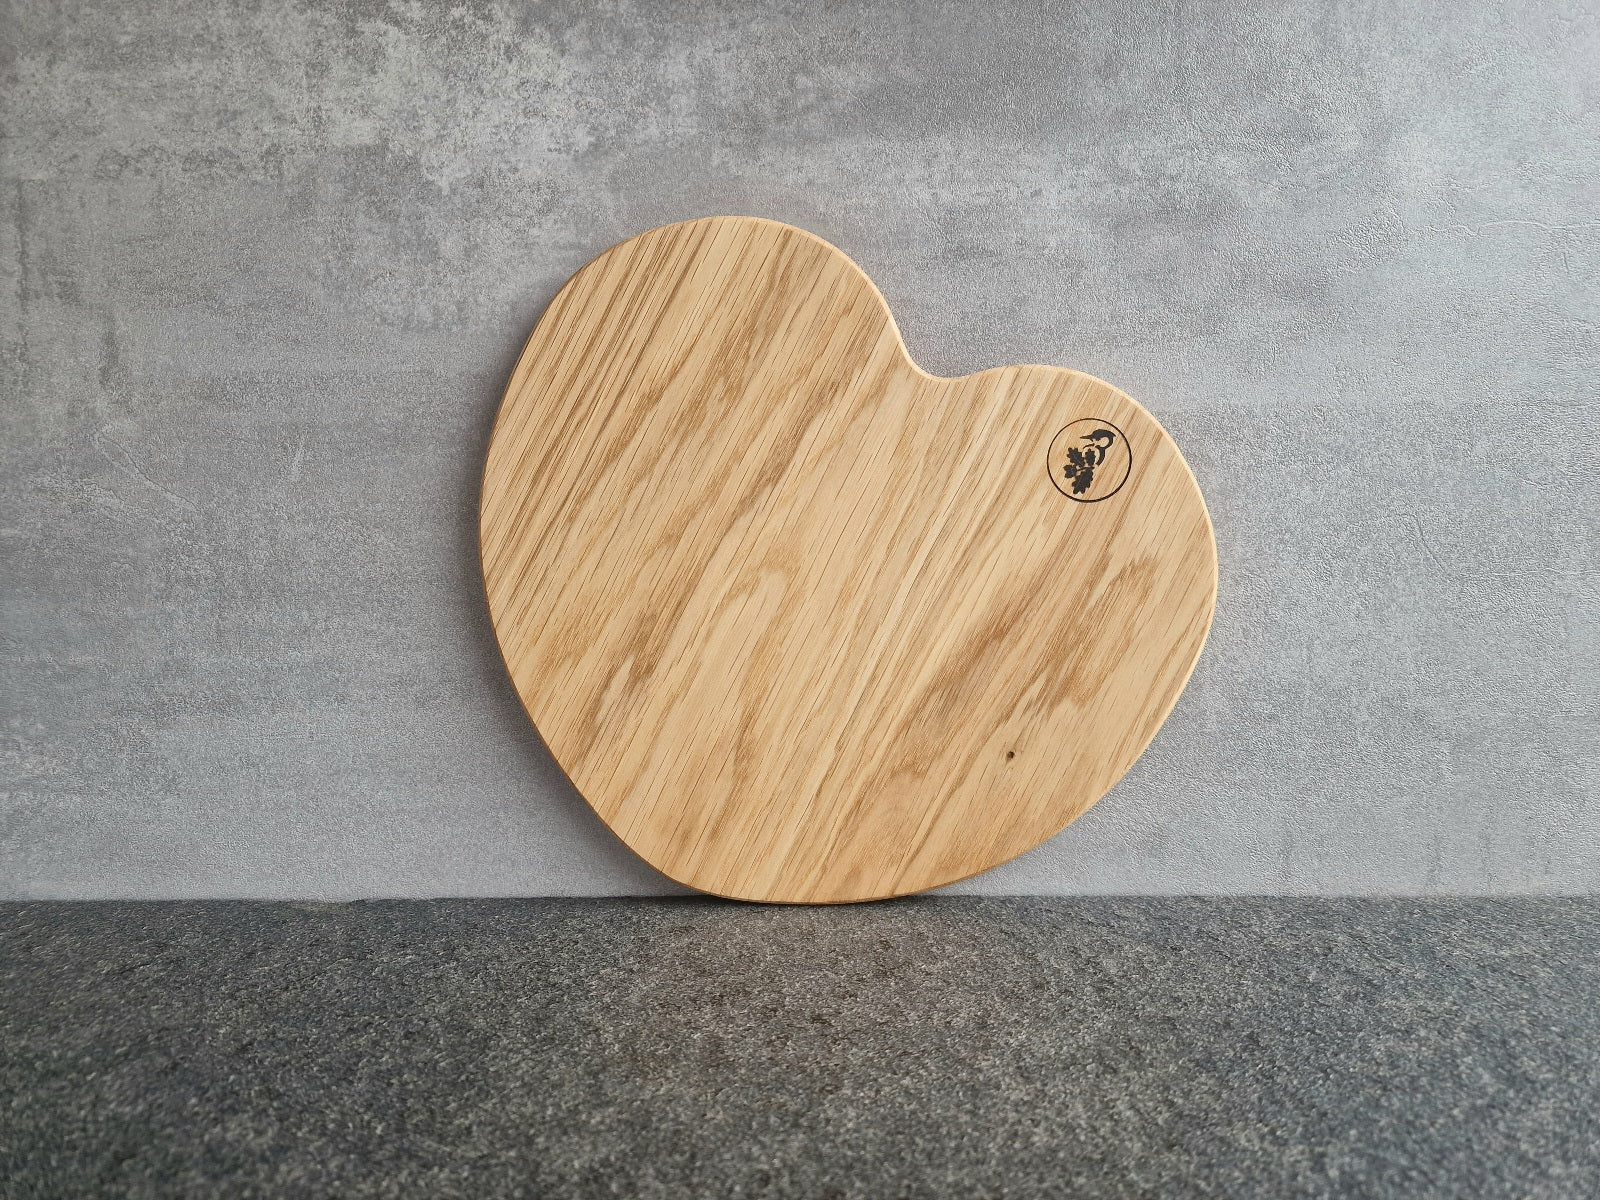 Dekoobjekt Herz aus Holz an einer Betonwand